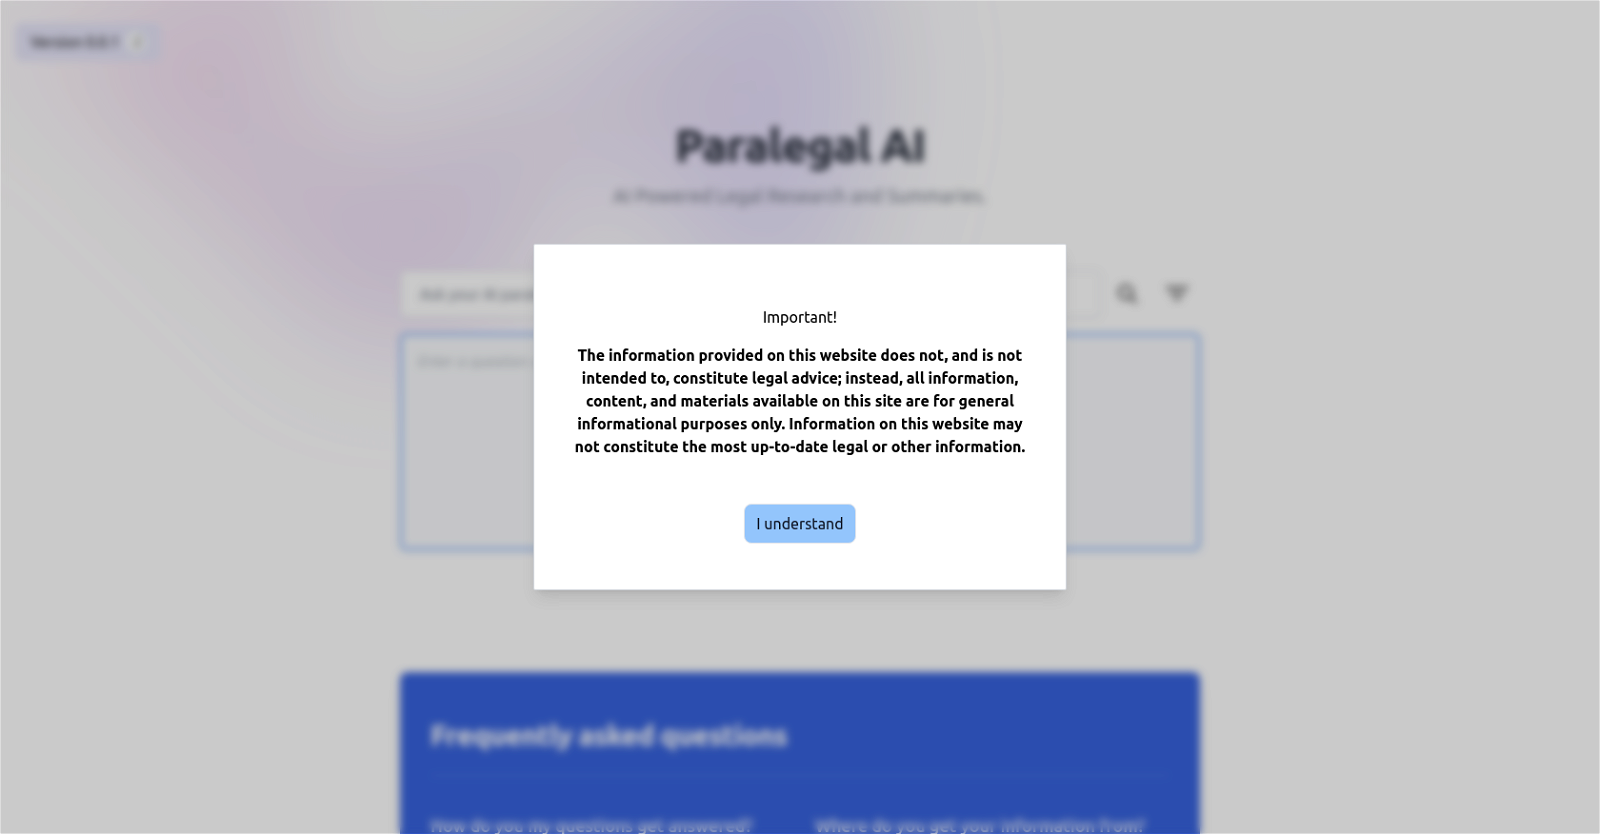 Paralegal AI website